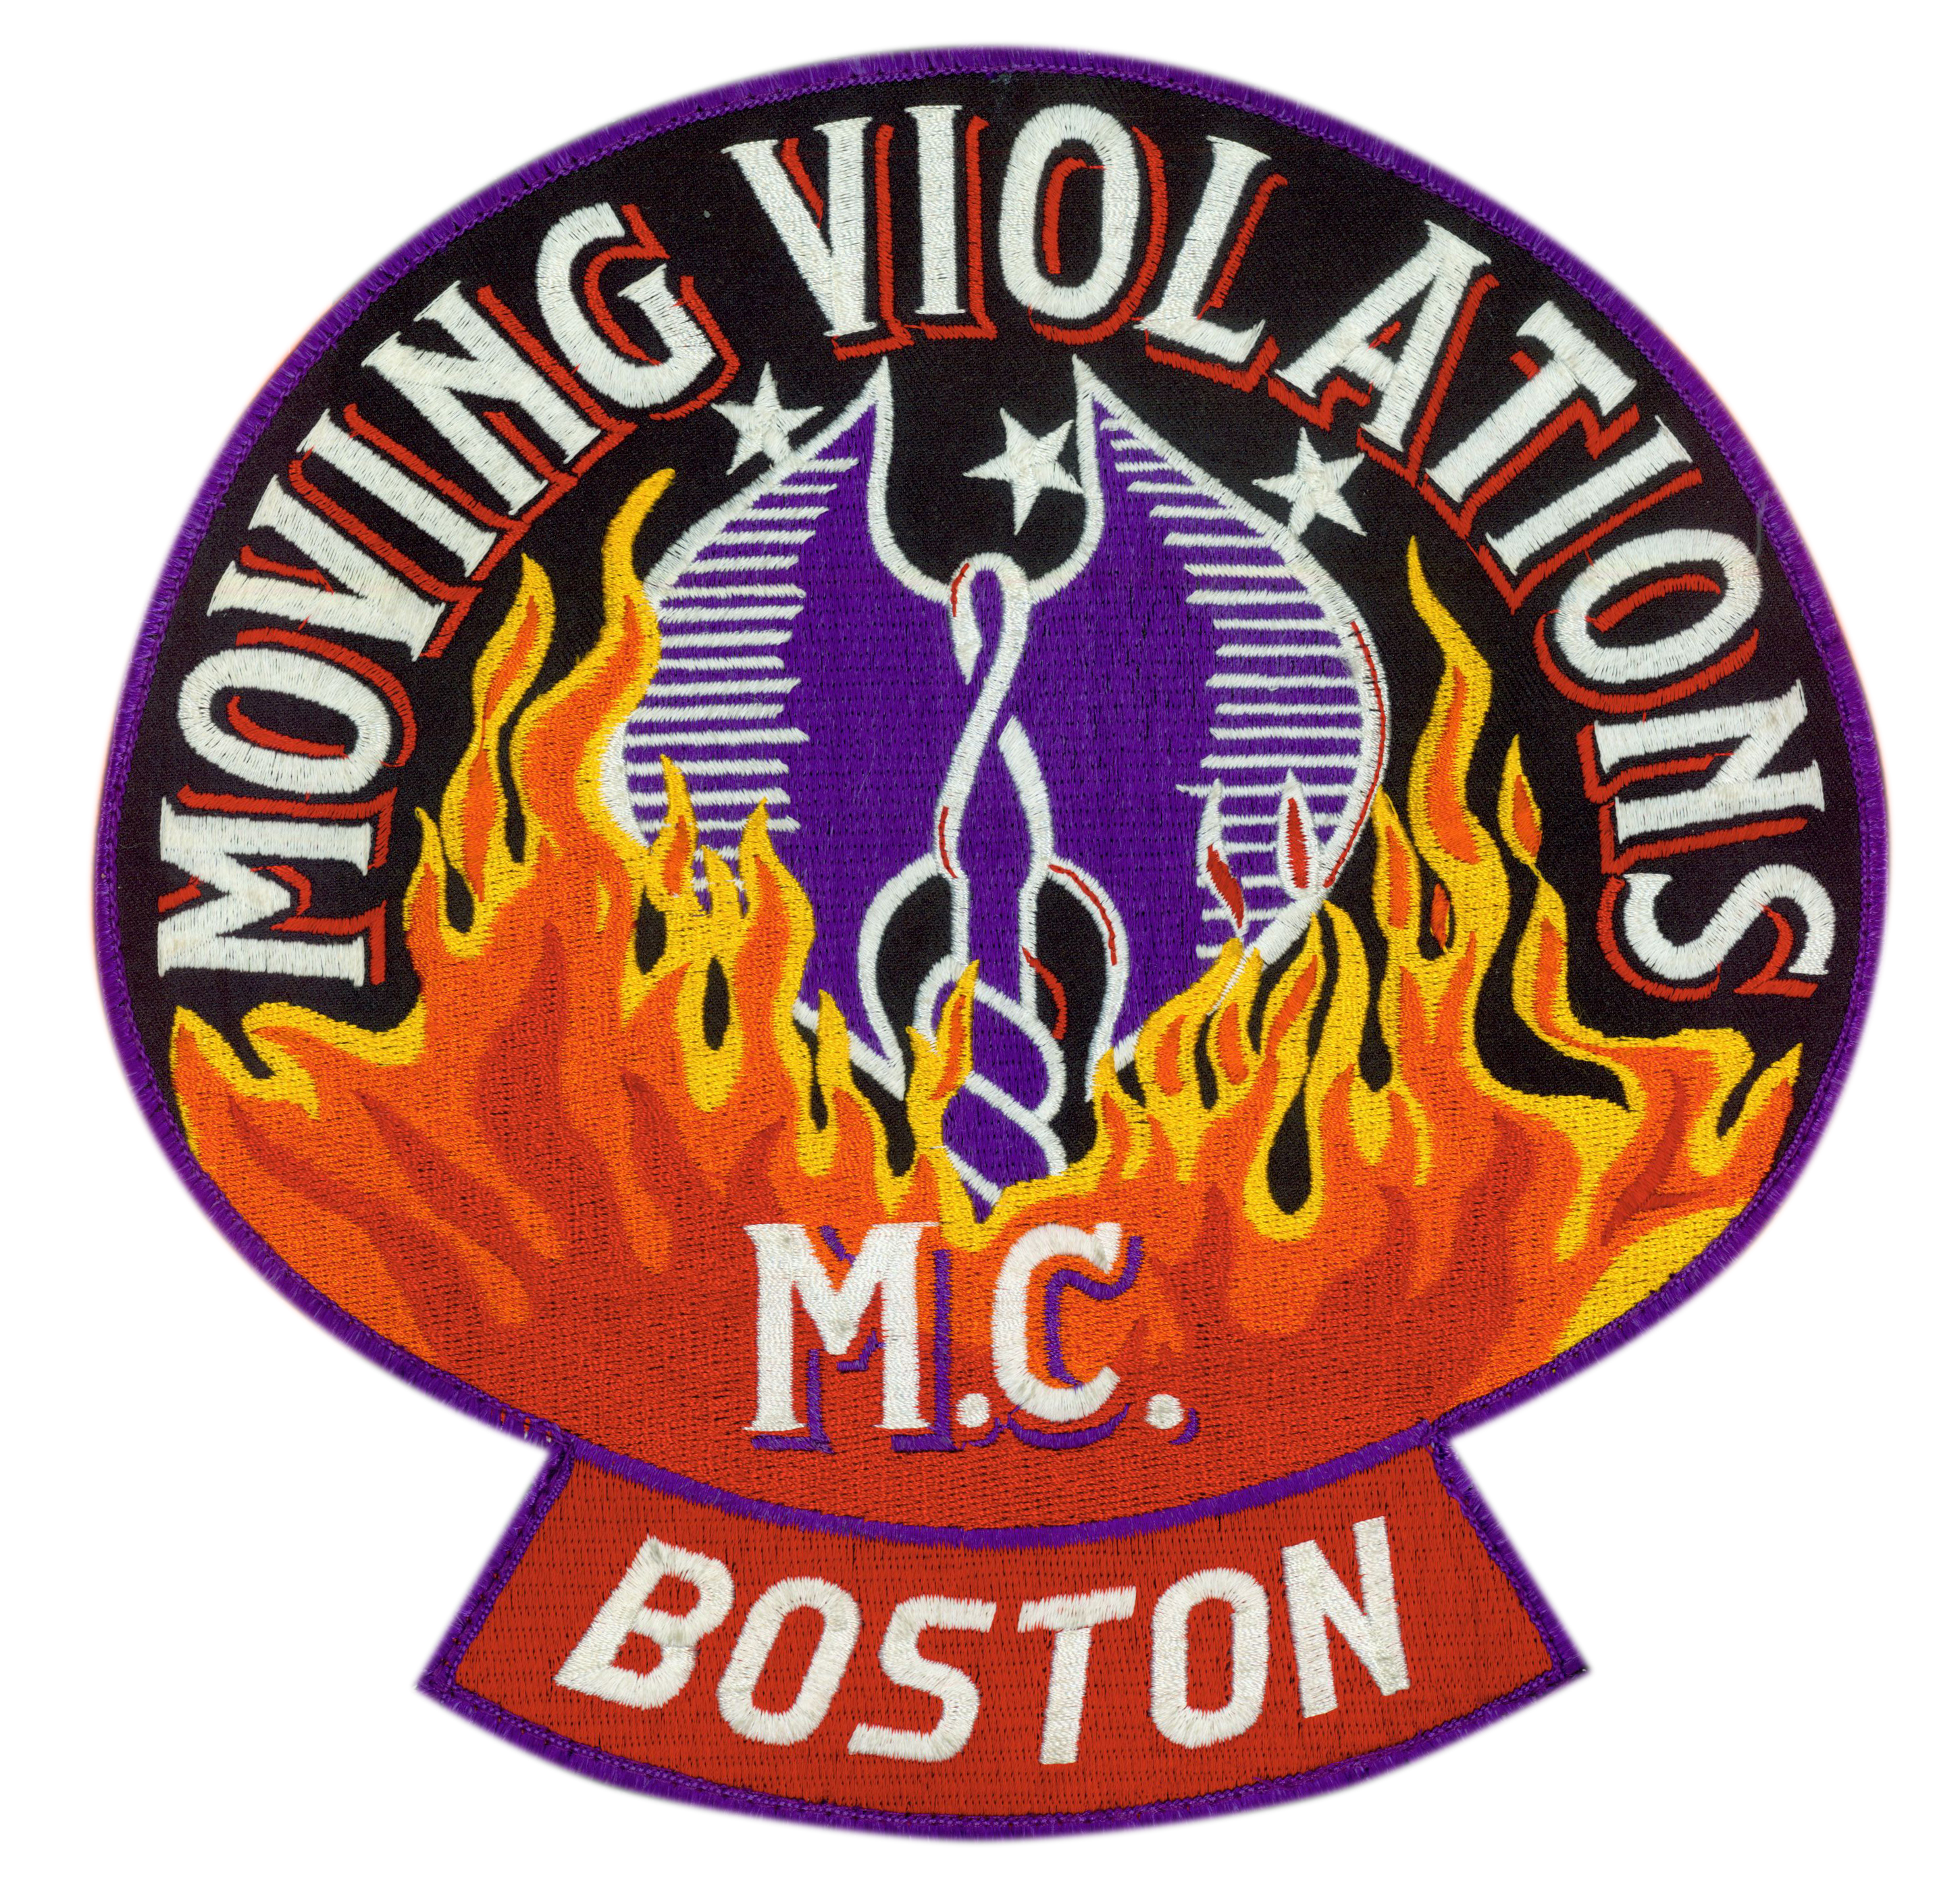 Moving Violations Motorcycle Club